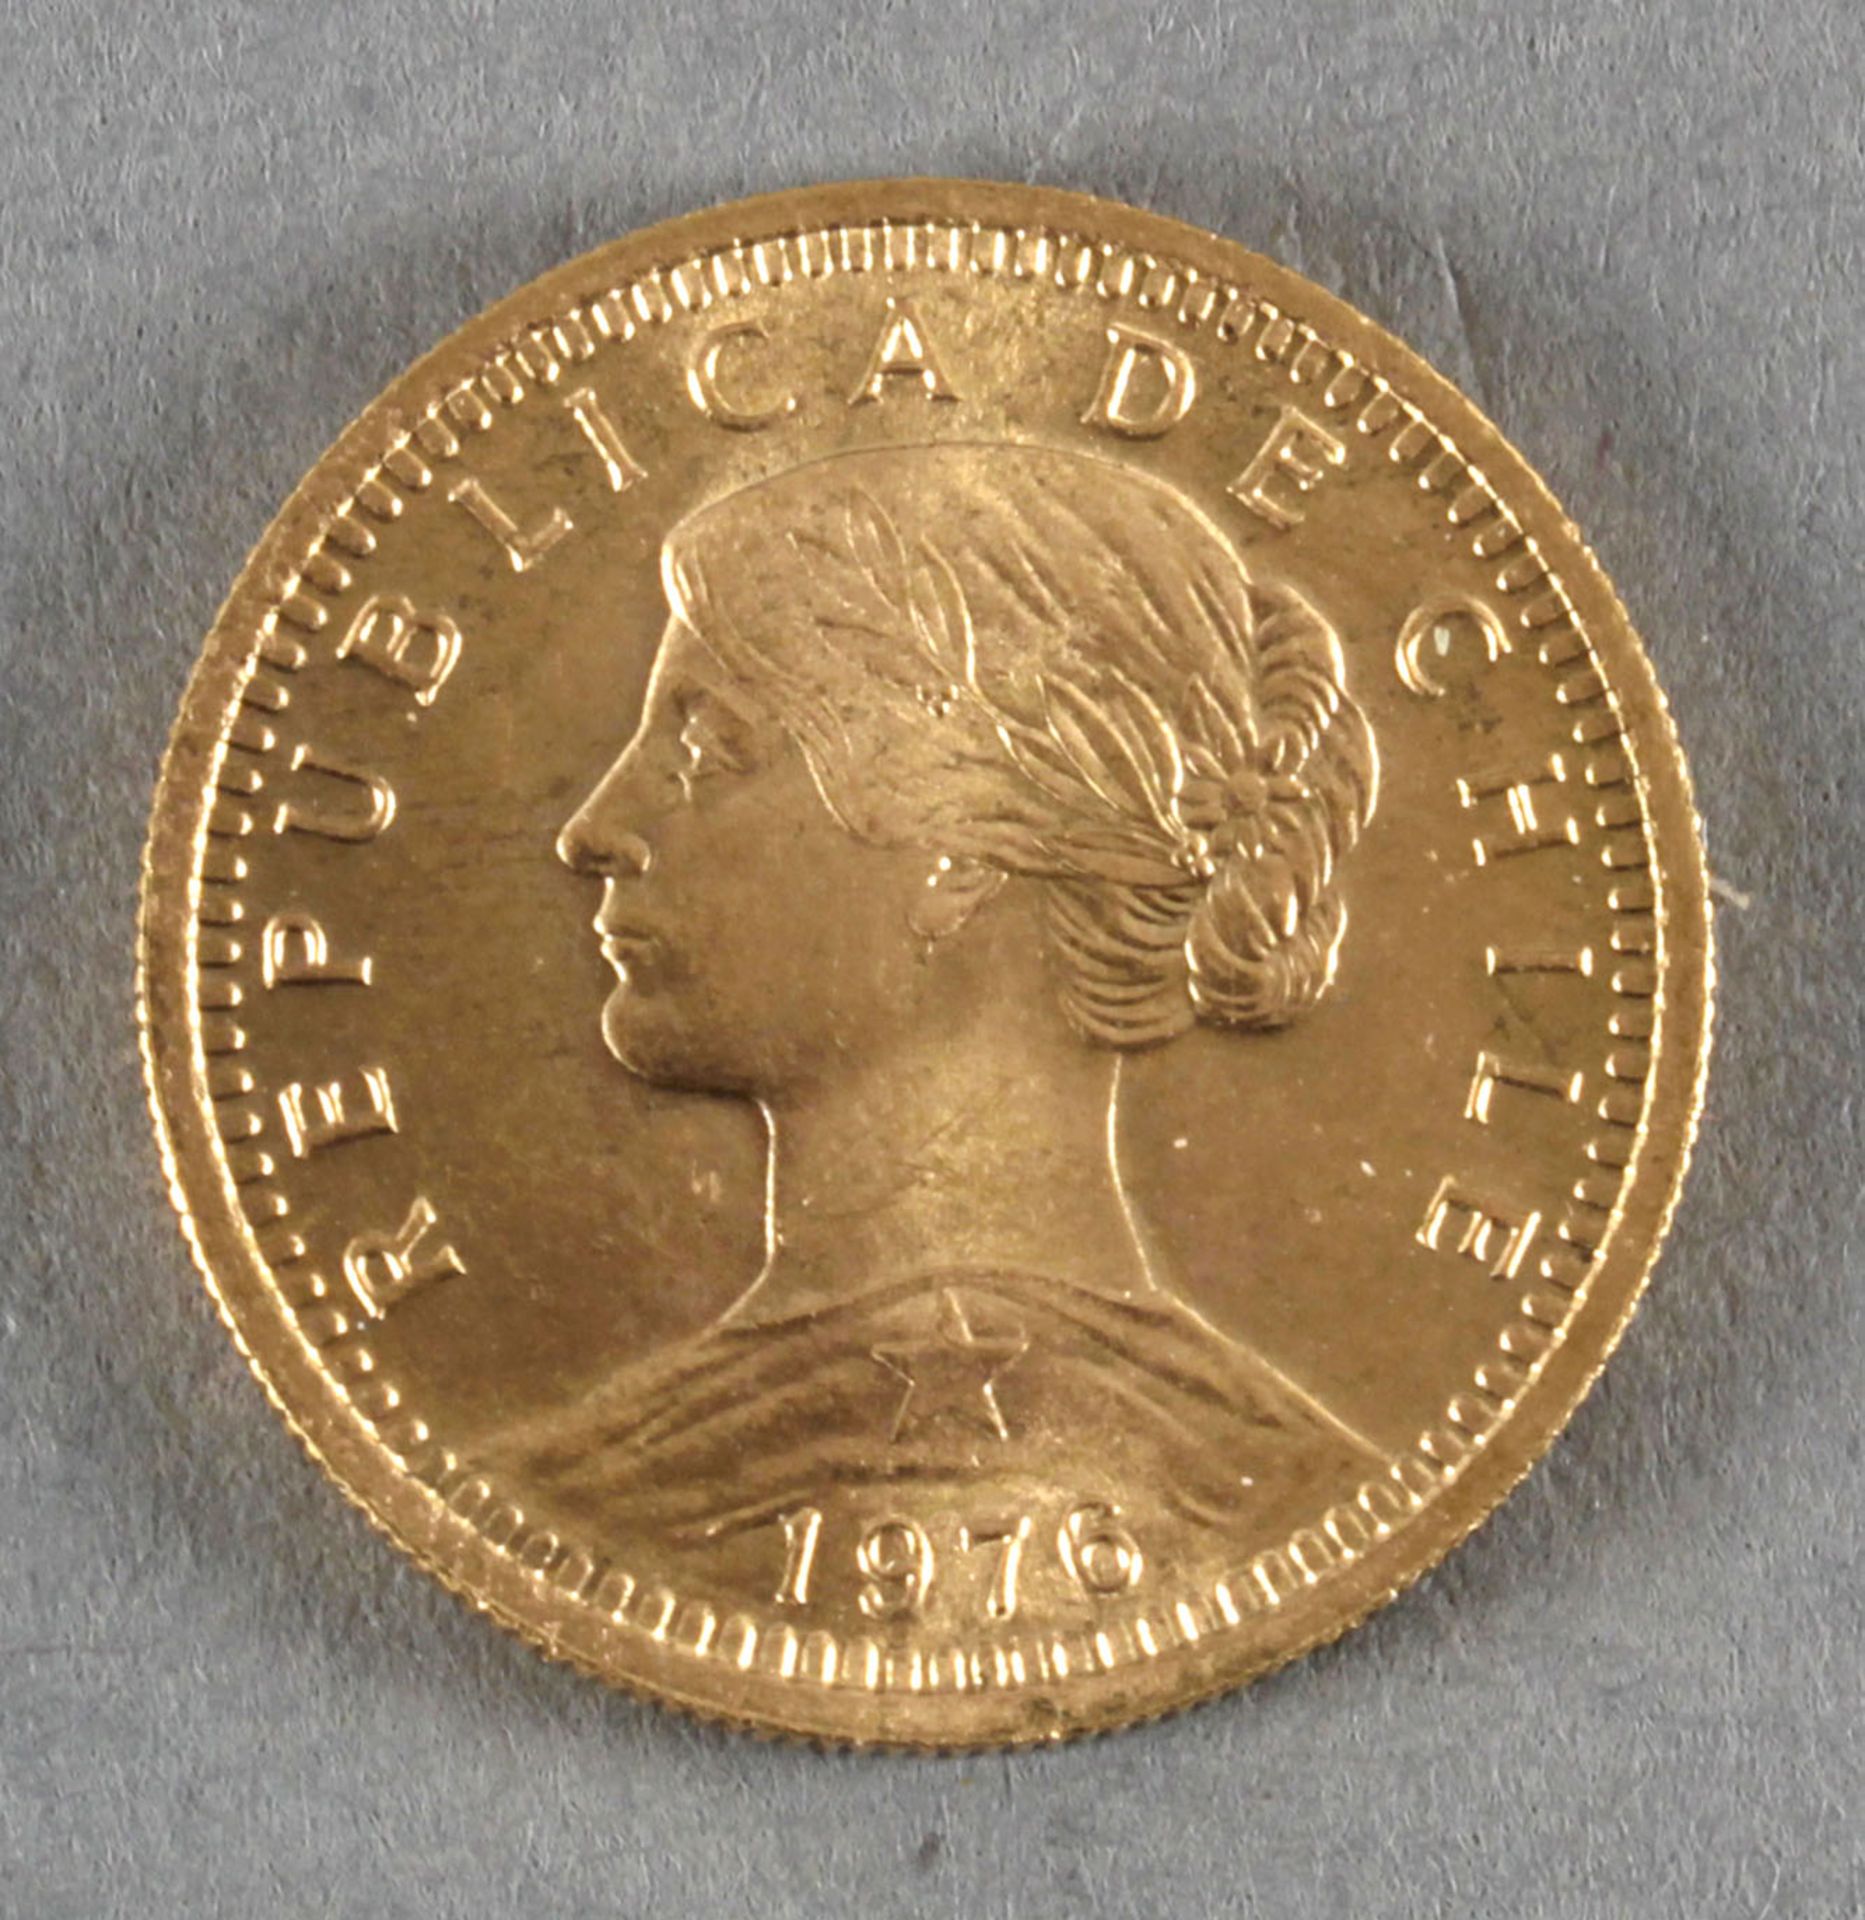 Goldmünze, 20 Pesos (Dos Condores), Chile, 1976